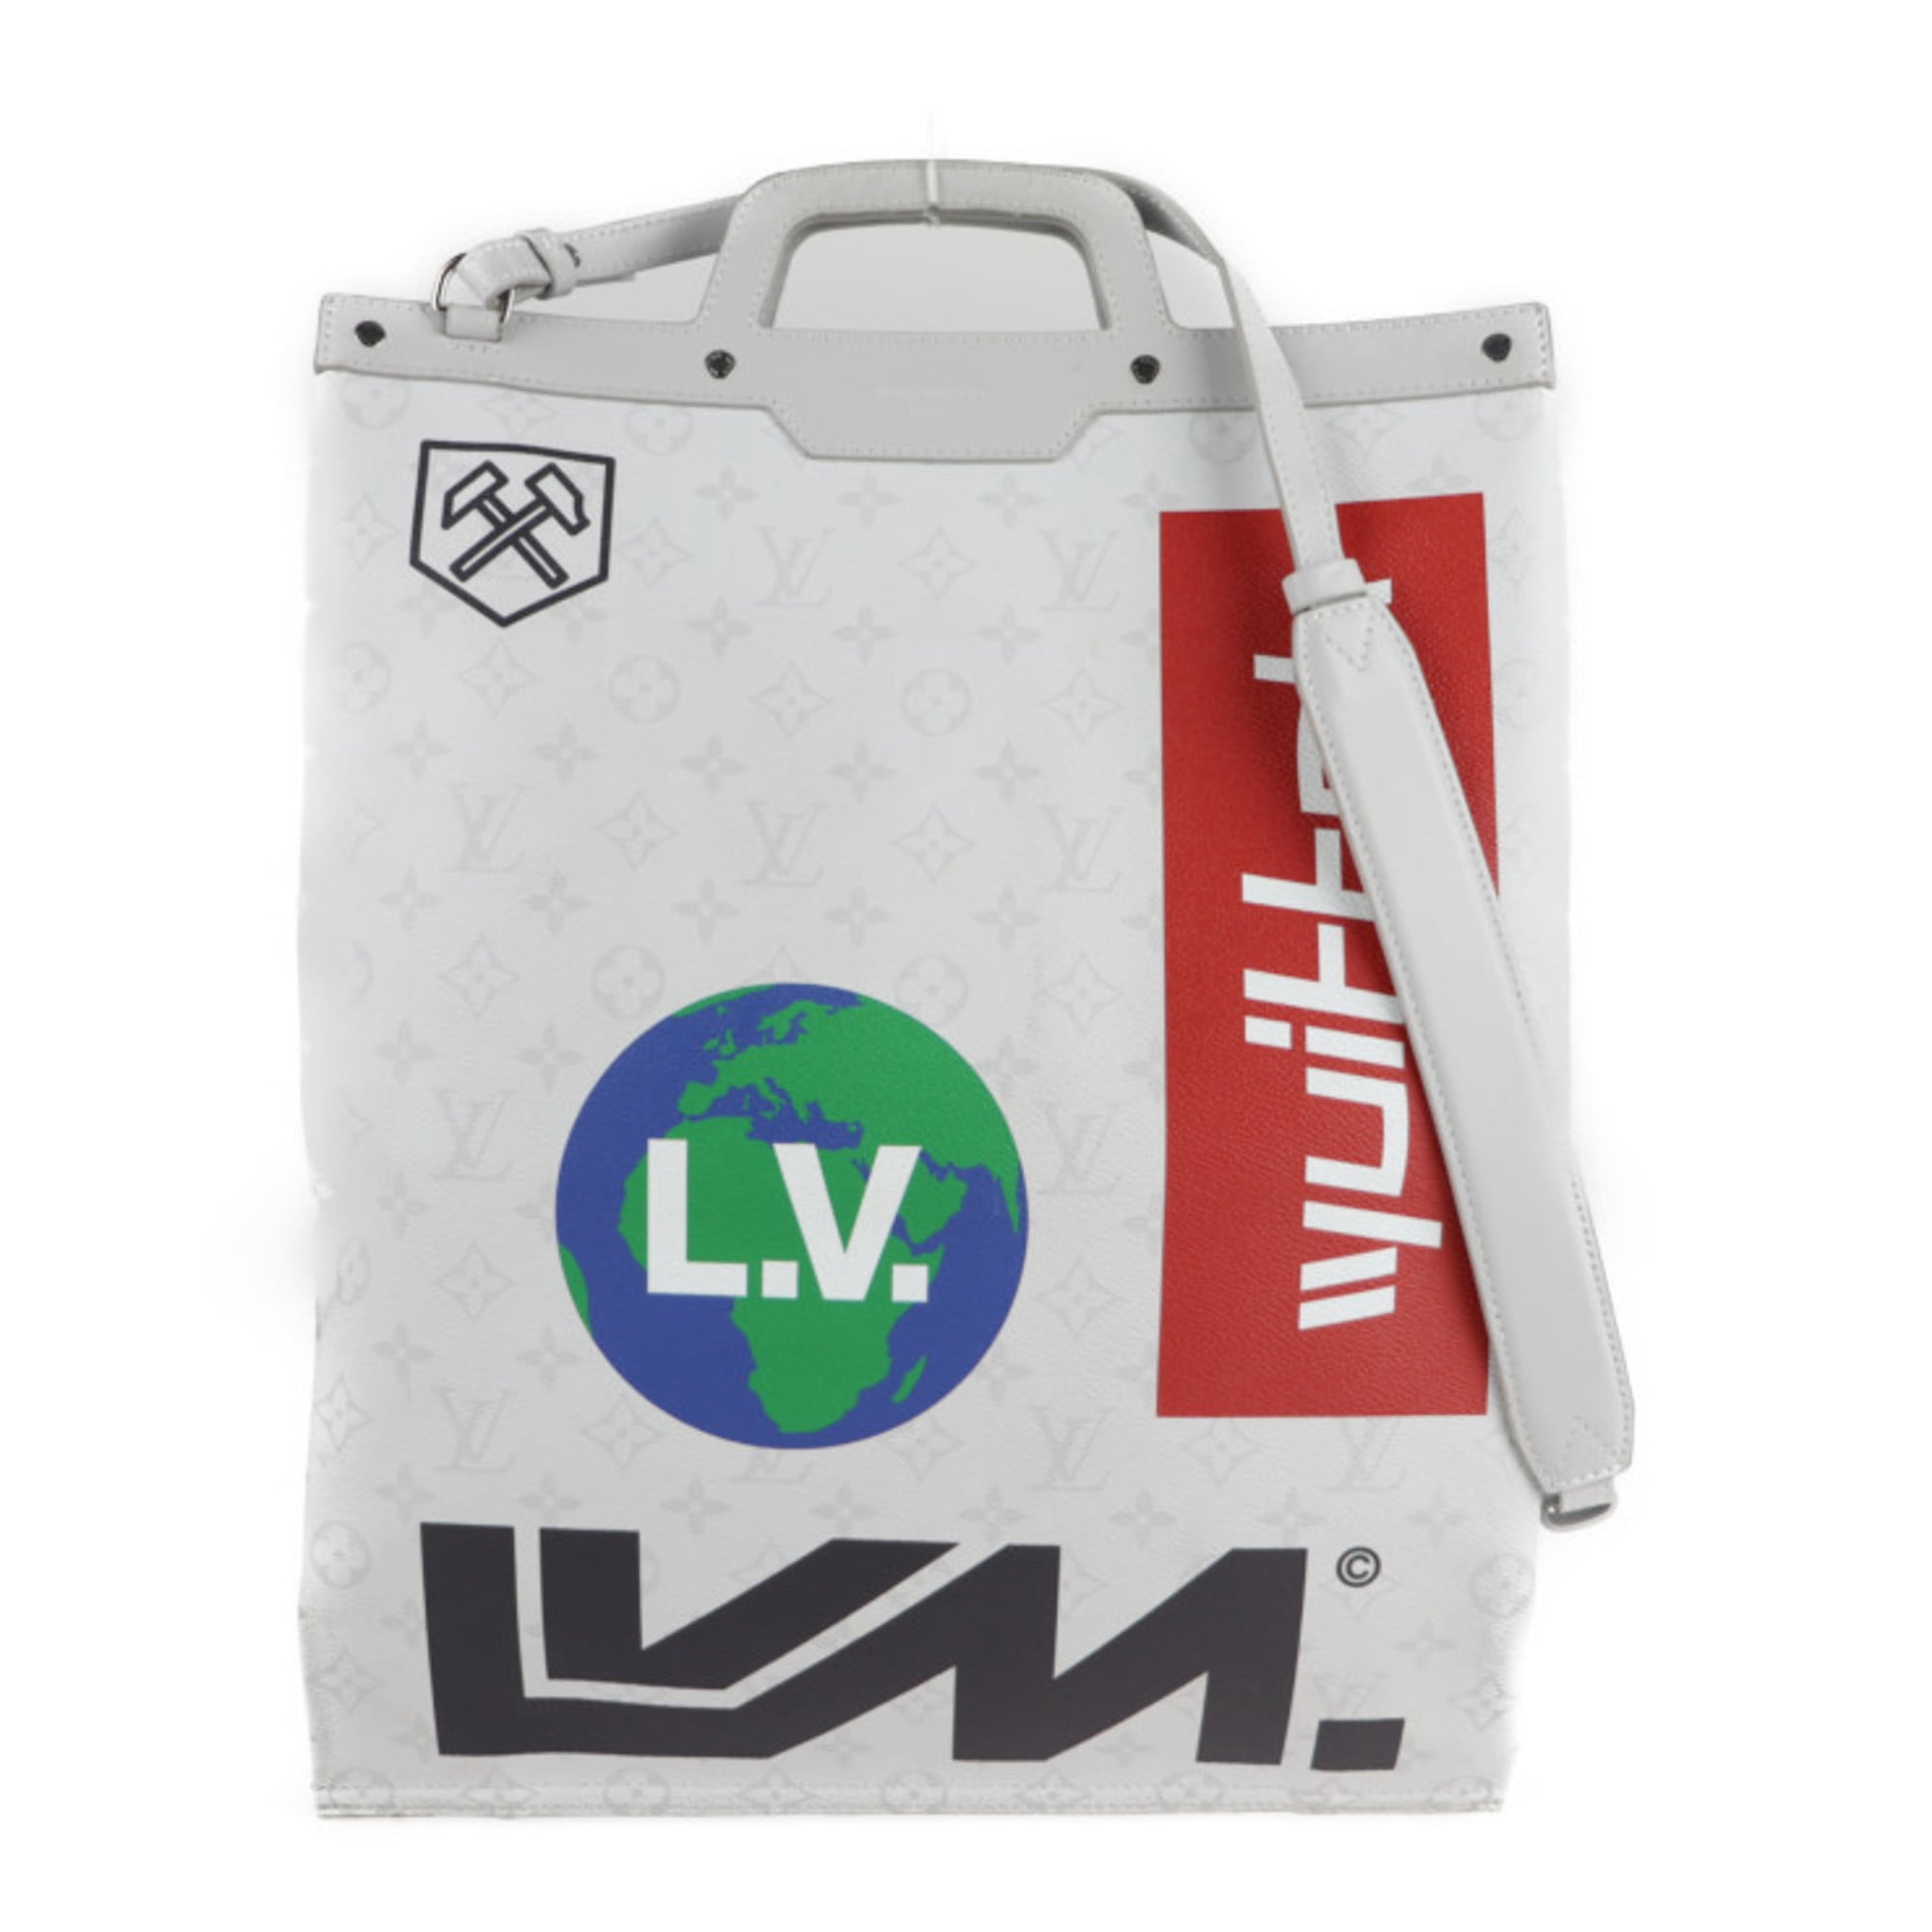 used lv luggage